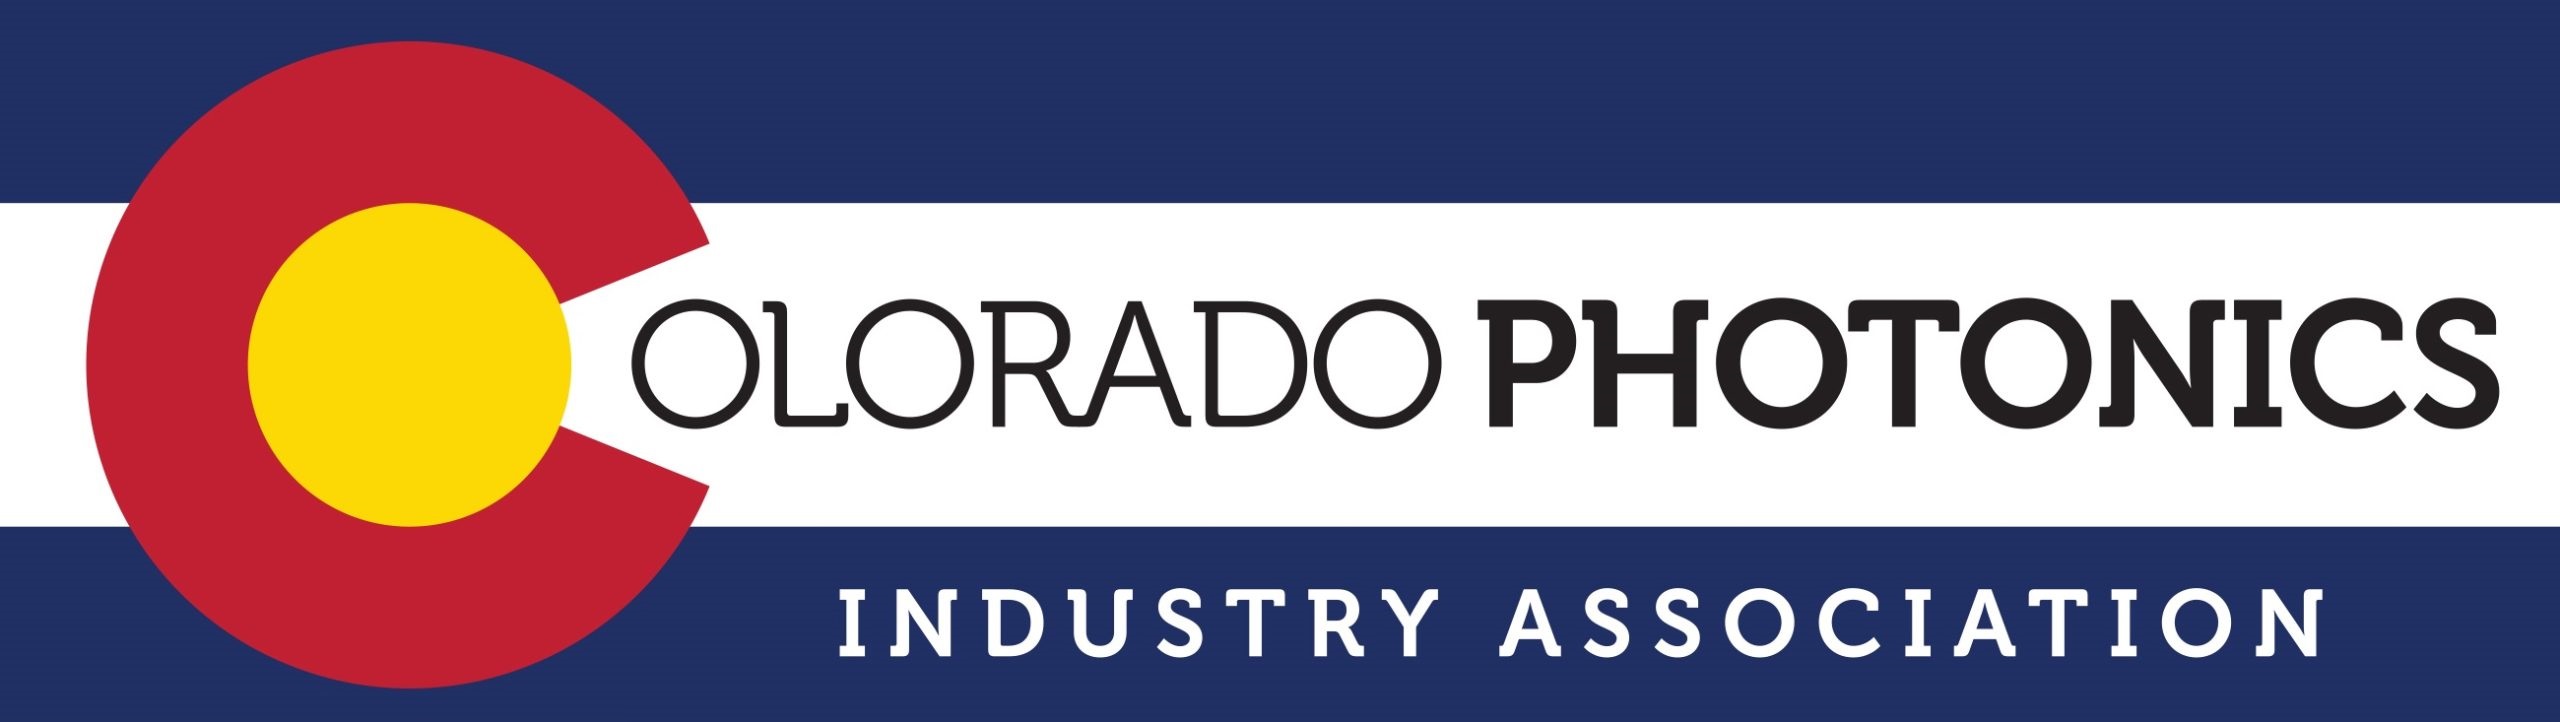 Colorado_Photonics_Logo_with CPIA